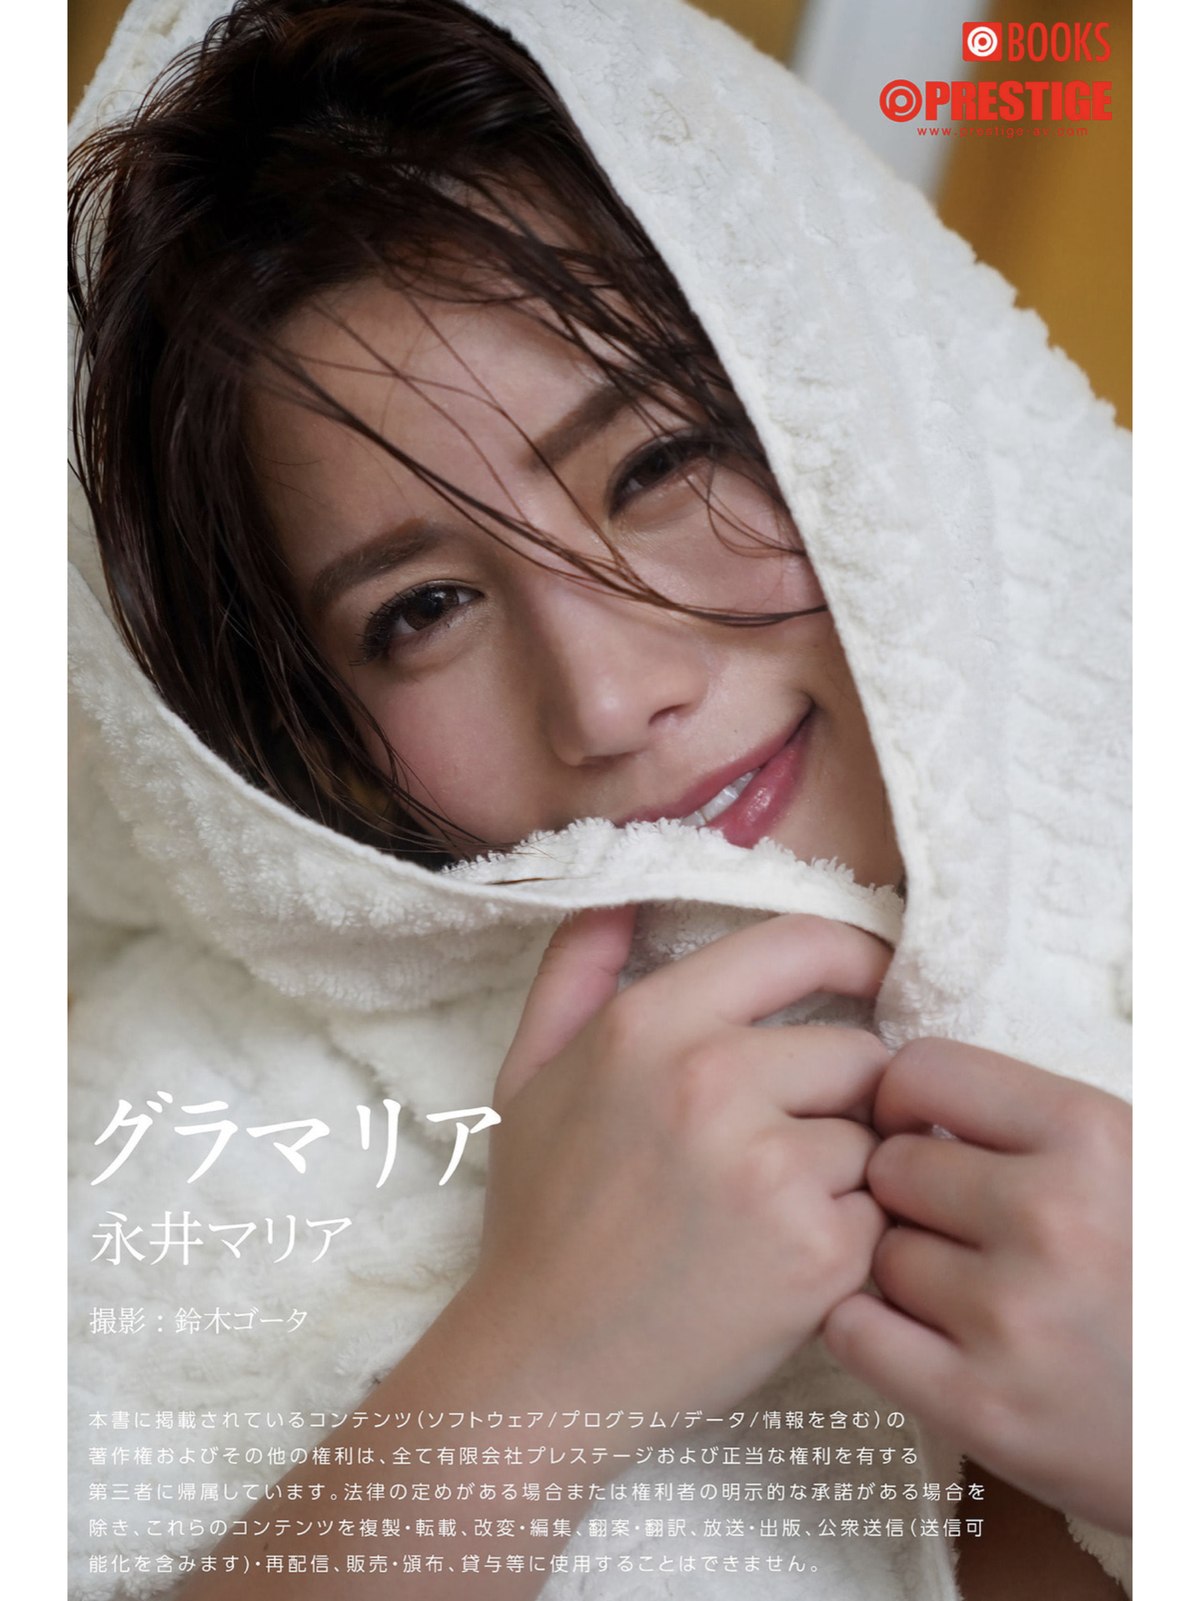 Photobook-グラマリア-Nagai-Maria-井マリア-Gravure-Photobook-0041-2109314637.jpg